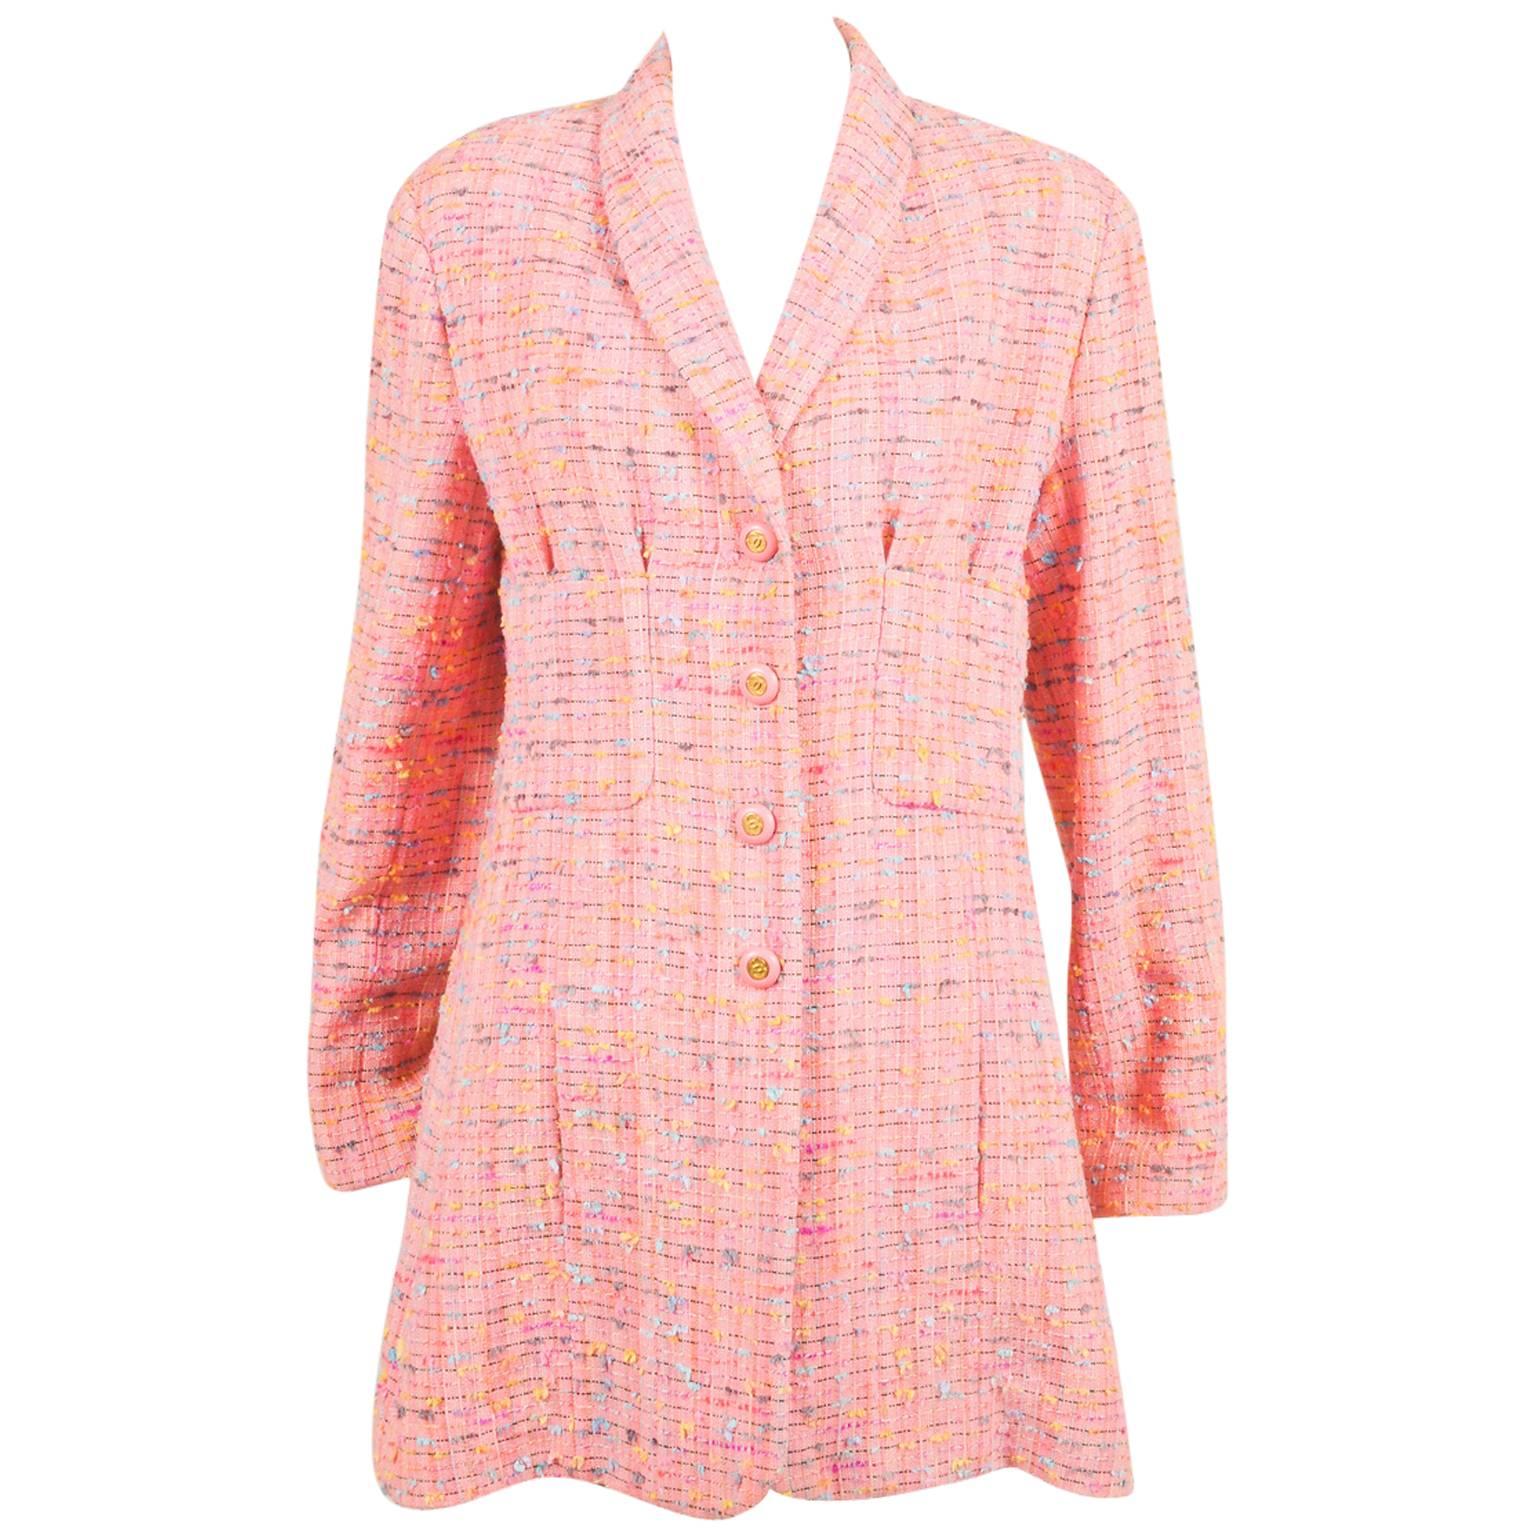 Vintage Chanel Boutique Pink Multicolor Longline Nubby Tweed LS Jacket SZ 42 For Sale